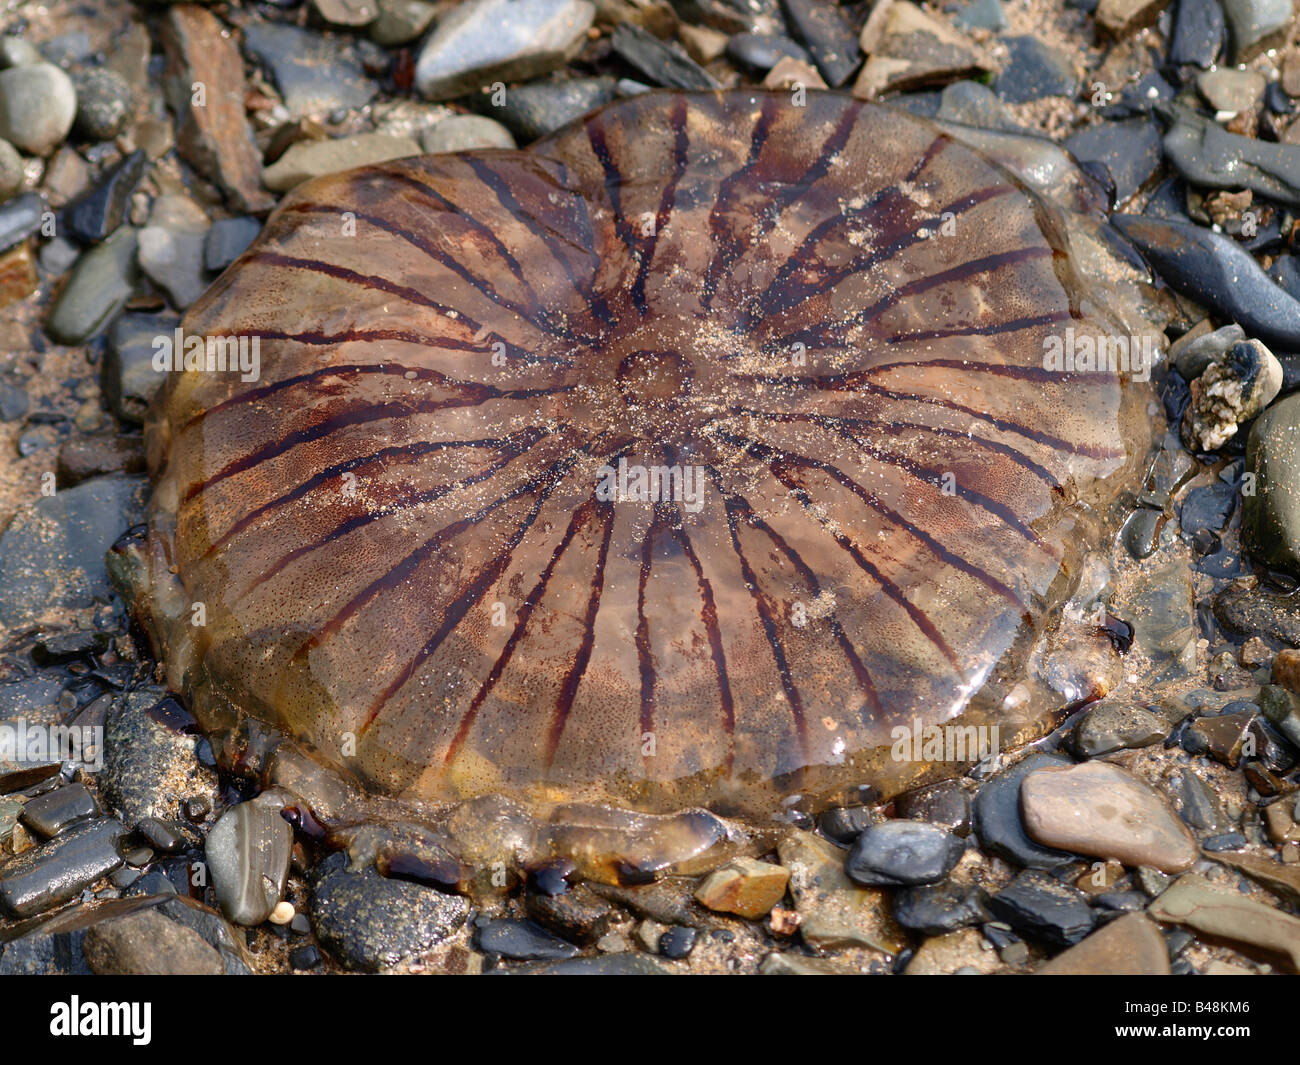 Compass Jellyfish, Chrysaora hysoscella found in coastal waters all round the British Isles. Stock Photo